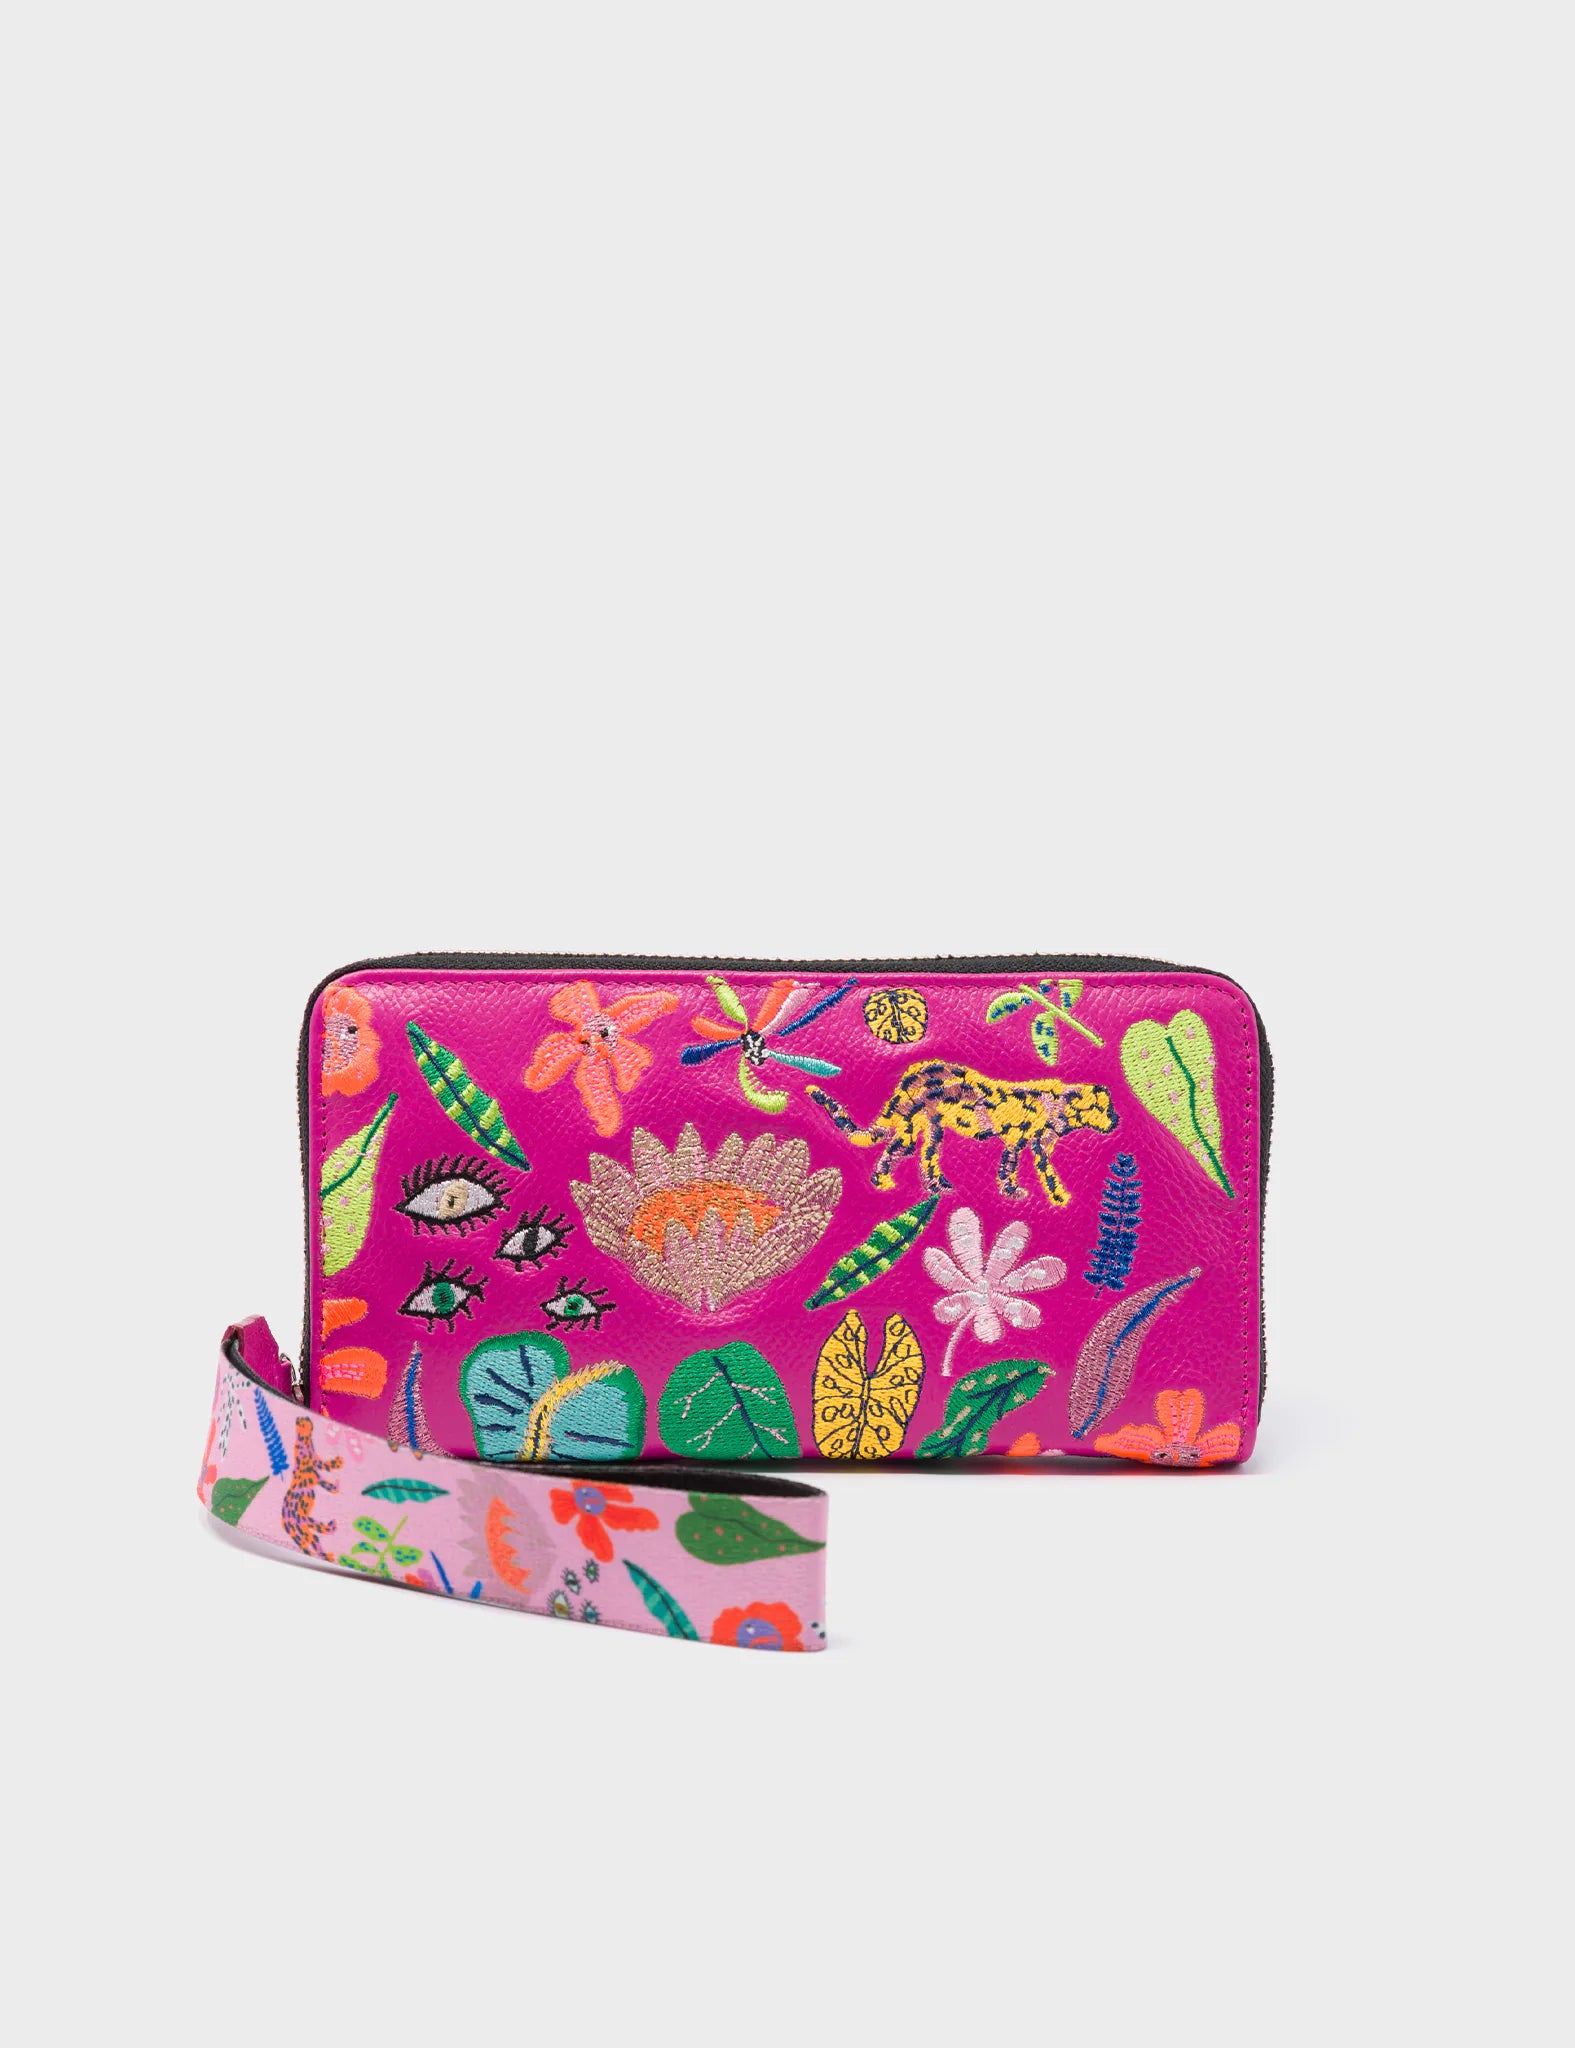 Francis Violet Leather Wallet - El Trópico Embroidery Design